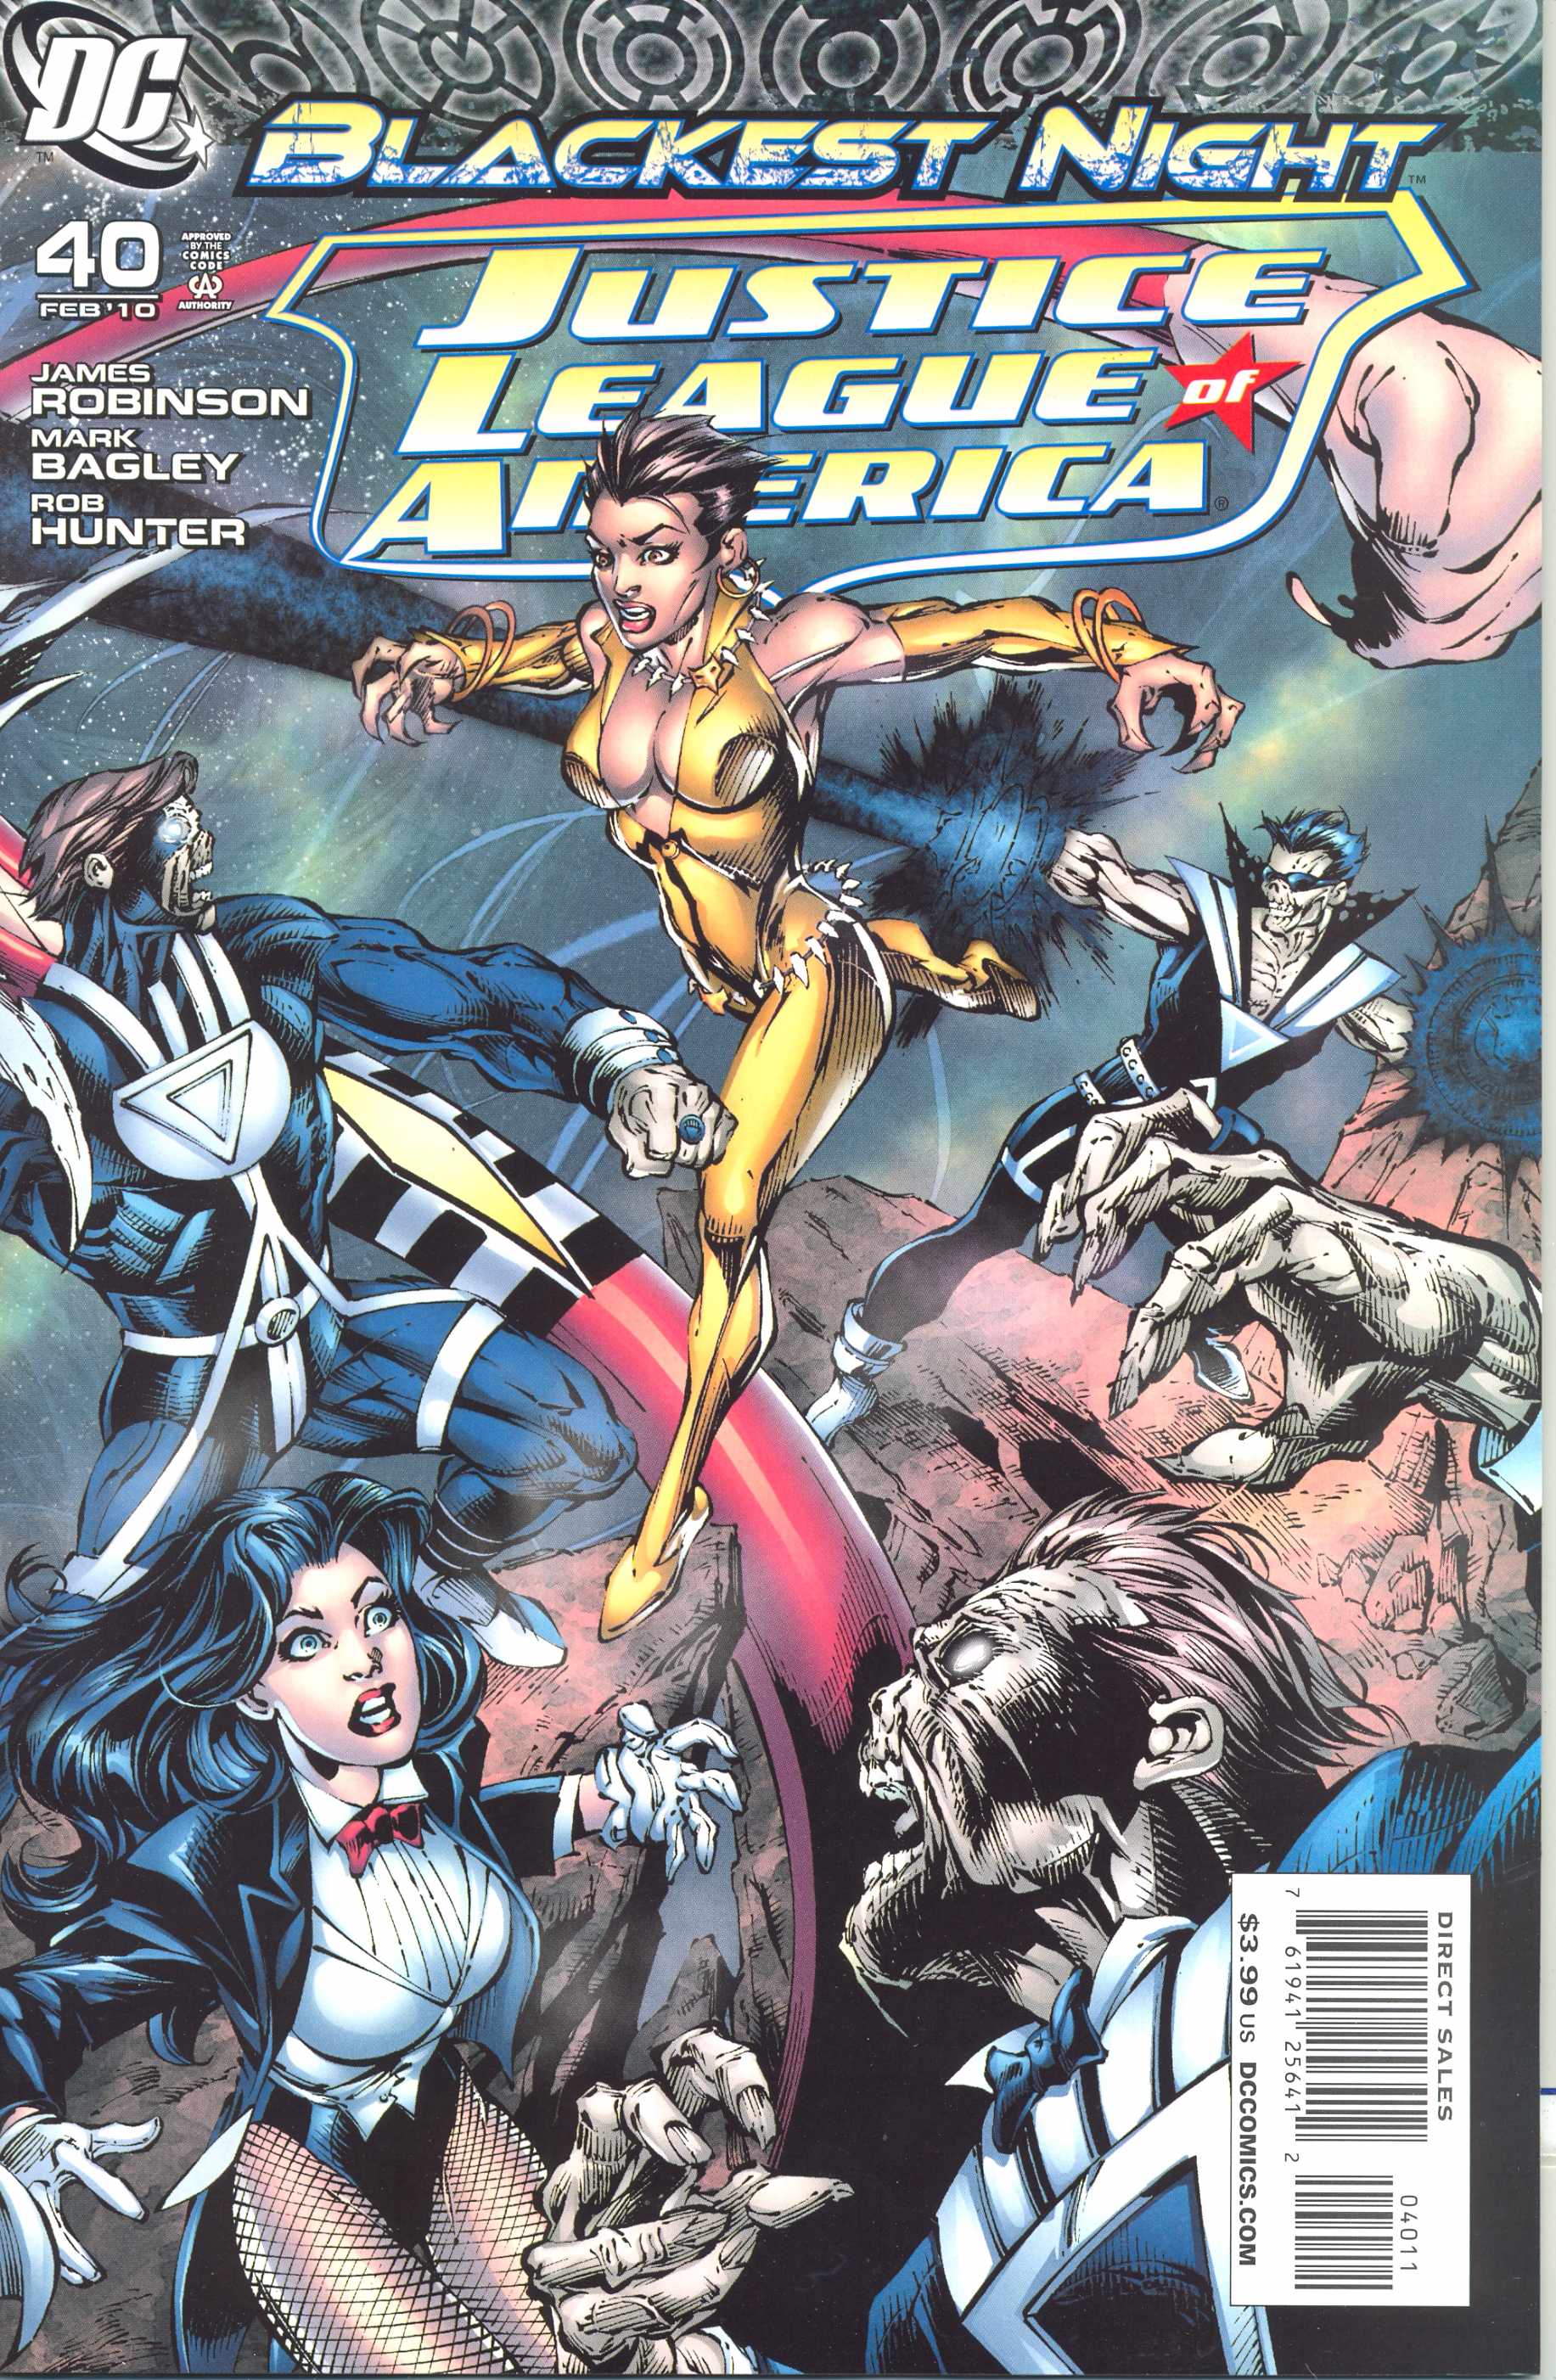 Justice League of America #40 (Blackest Night) (2006)